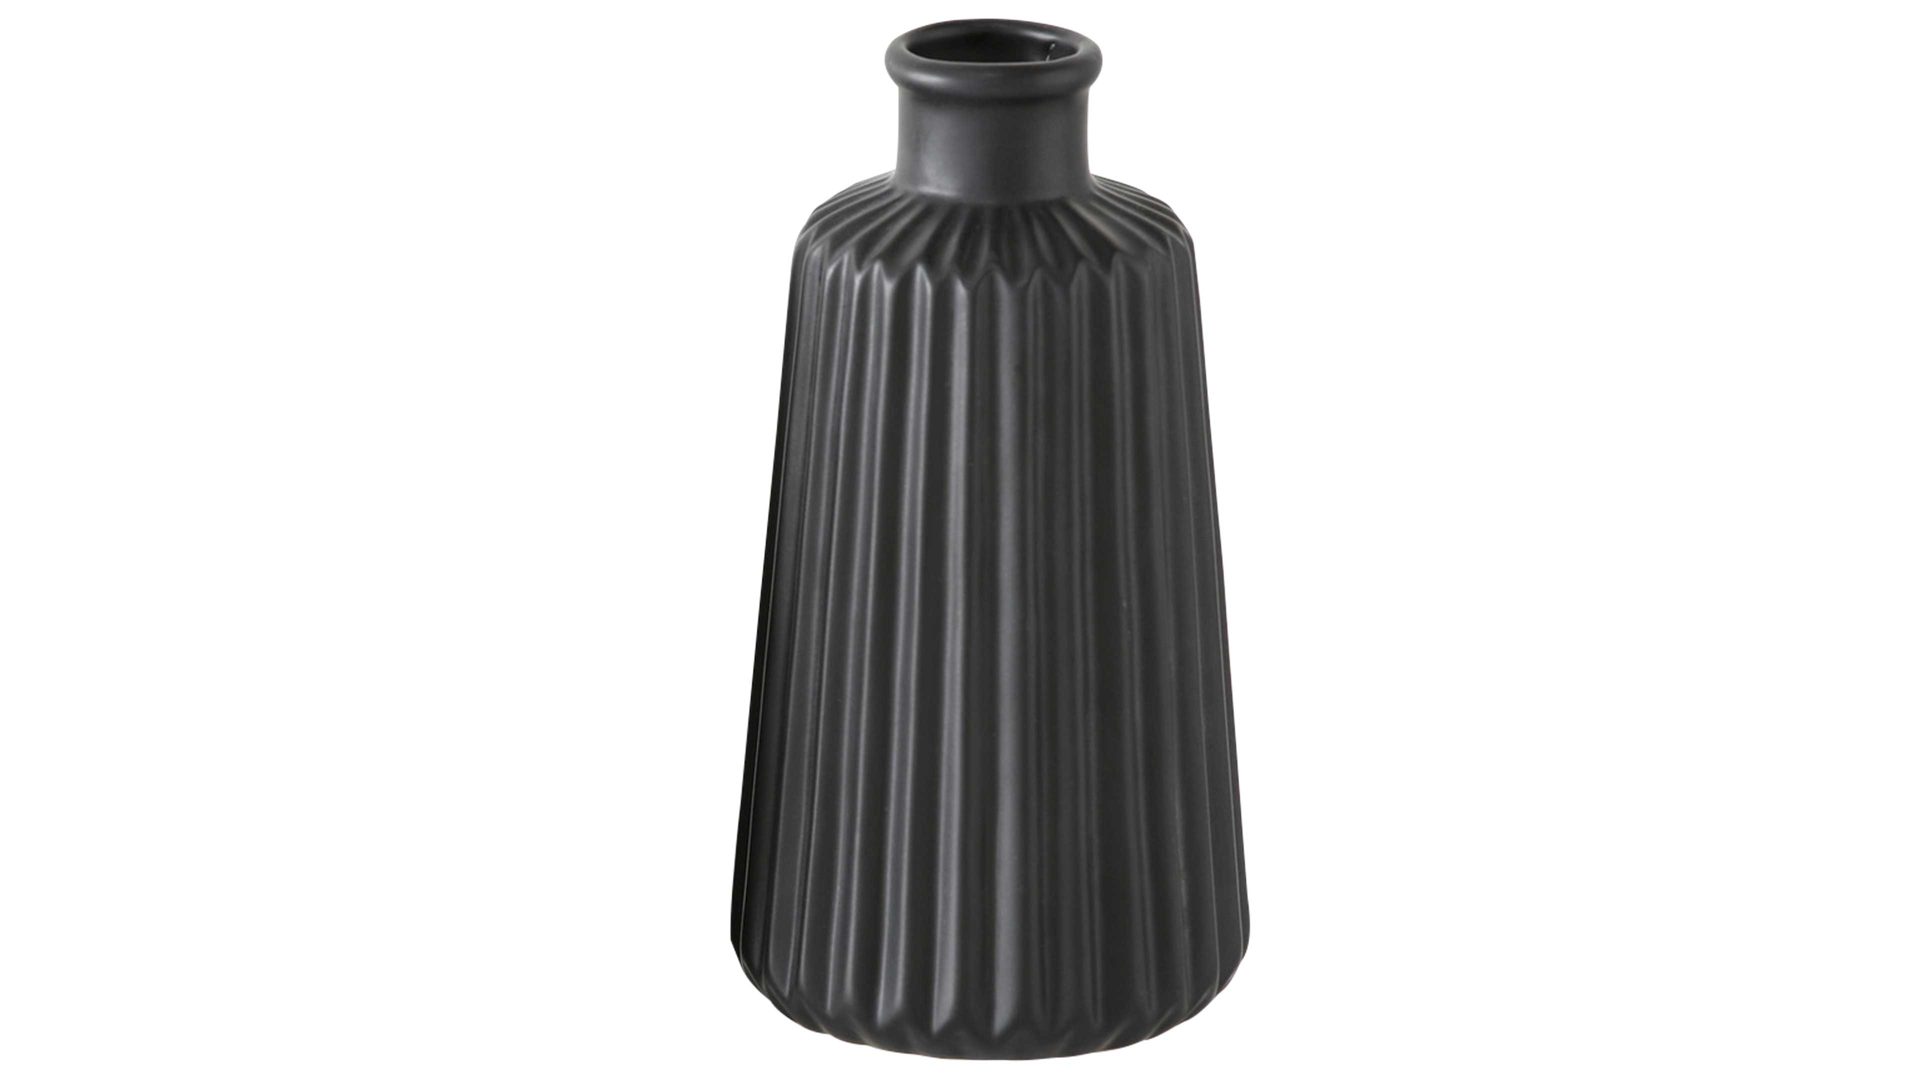 Vase Interliving BEST BUDDYS! aus Keramik in Schwarz Interliving BEST BUDDYS! Vase Esko mattschwarzes Porzellan - Höhe ca. 17 cm